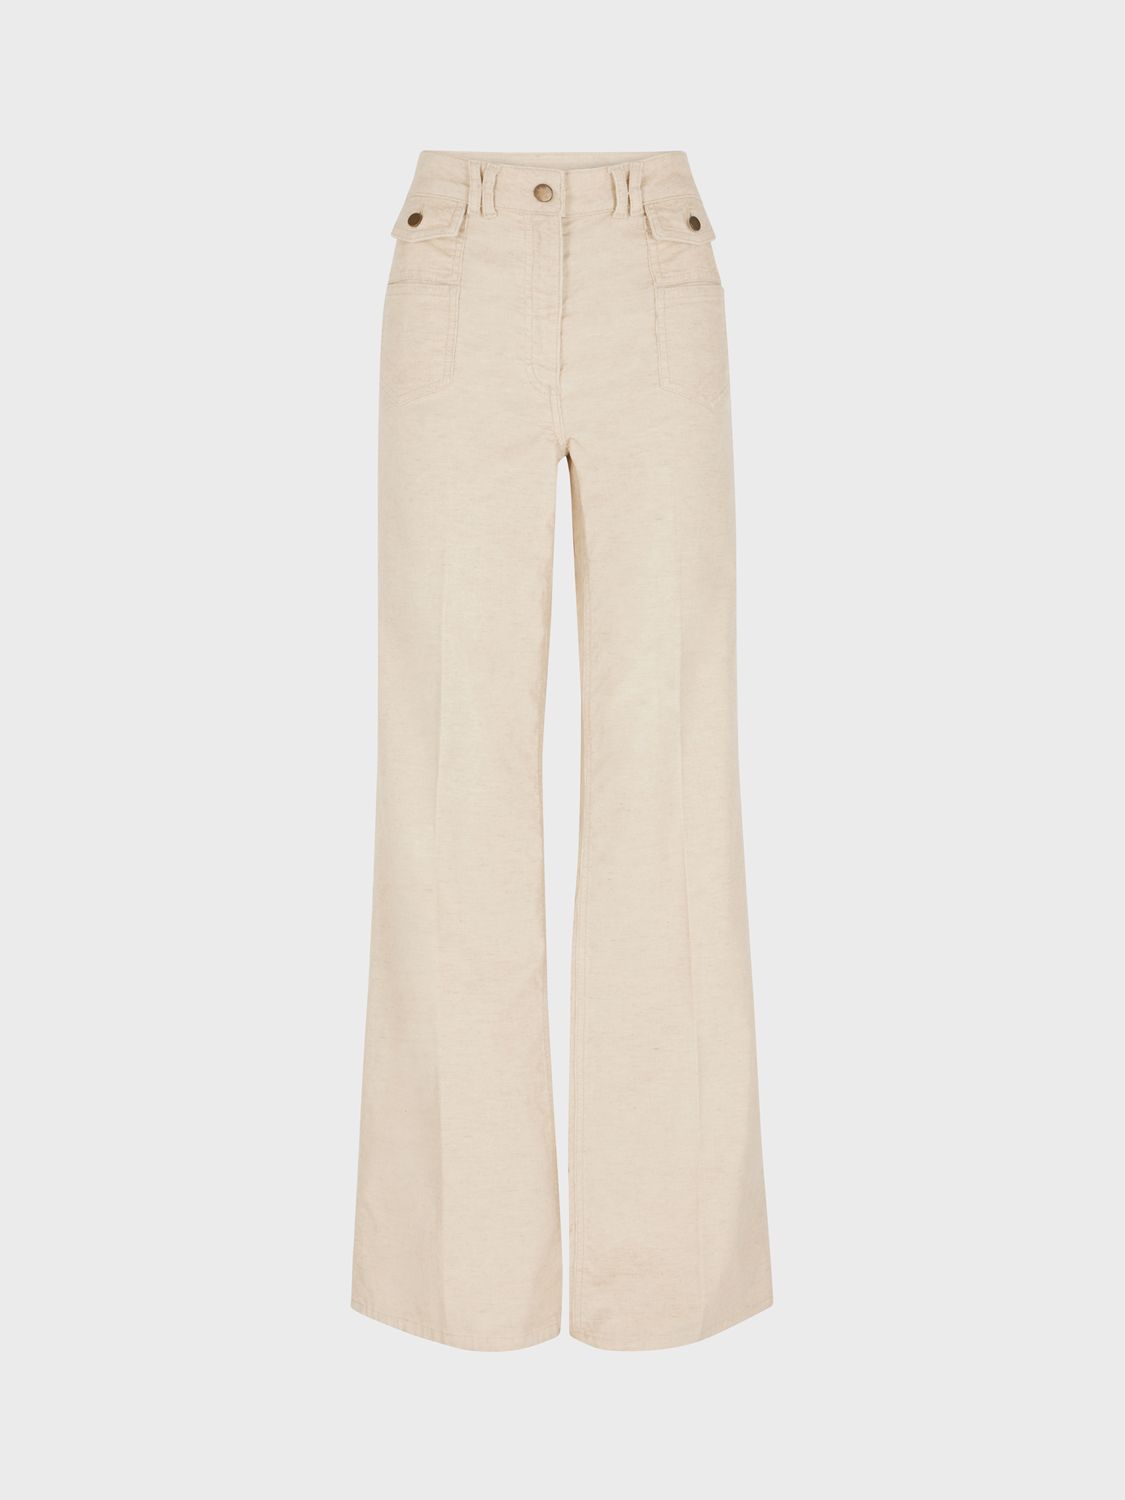 Gerard Darel Anna Cotton Blend Jeans, Natural at John Lewis & Partners